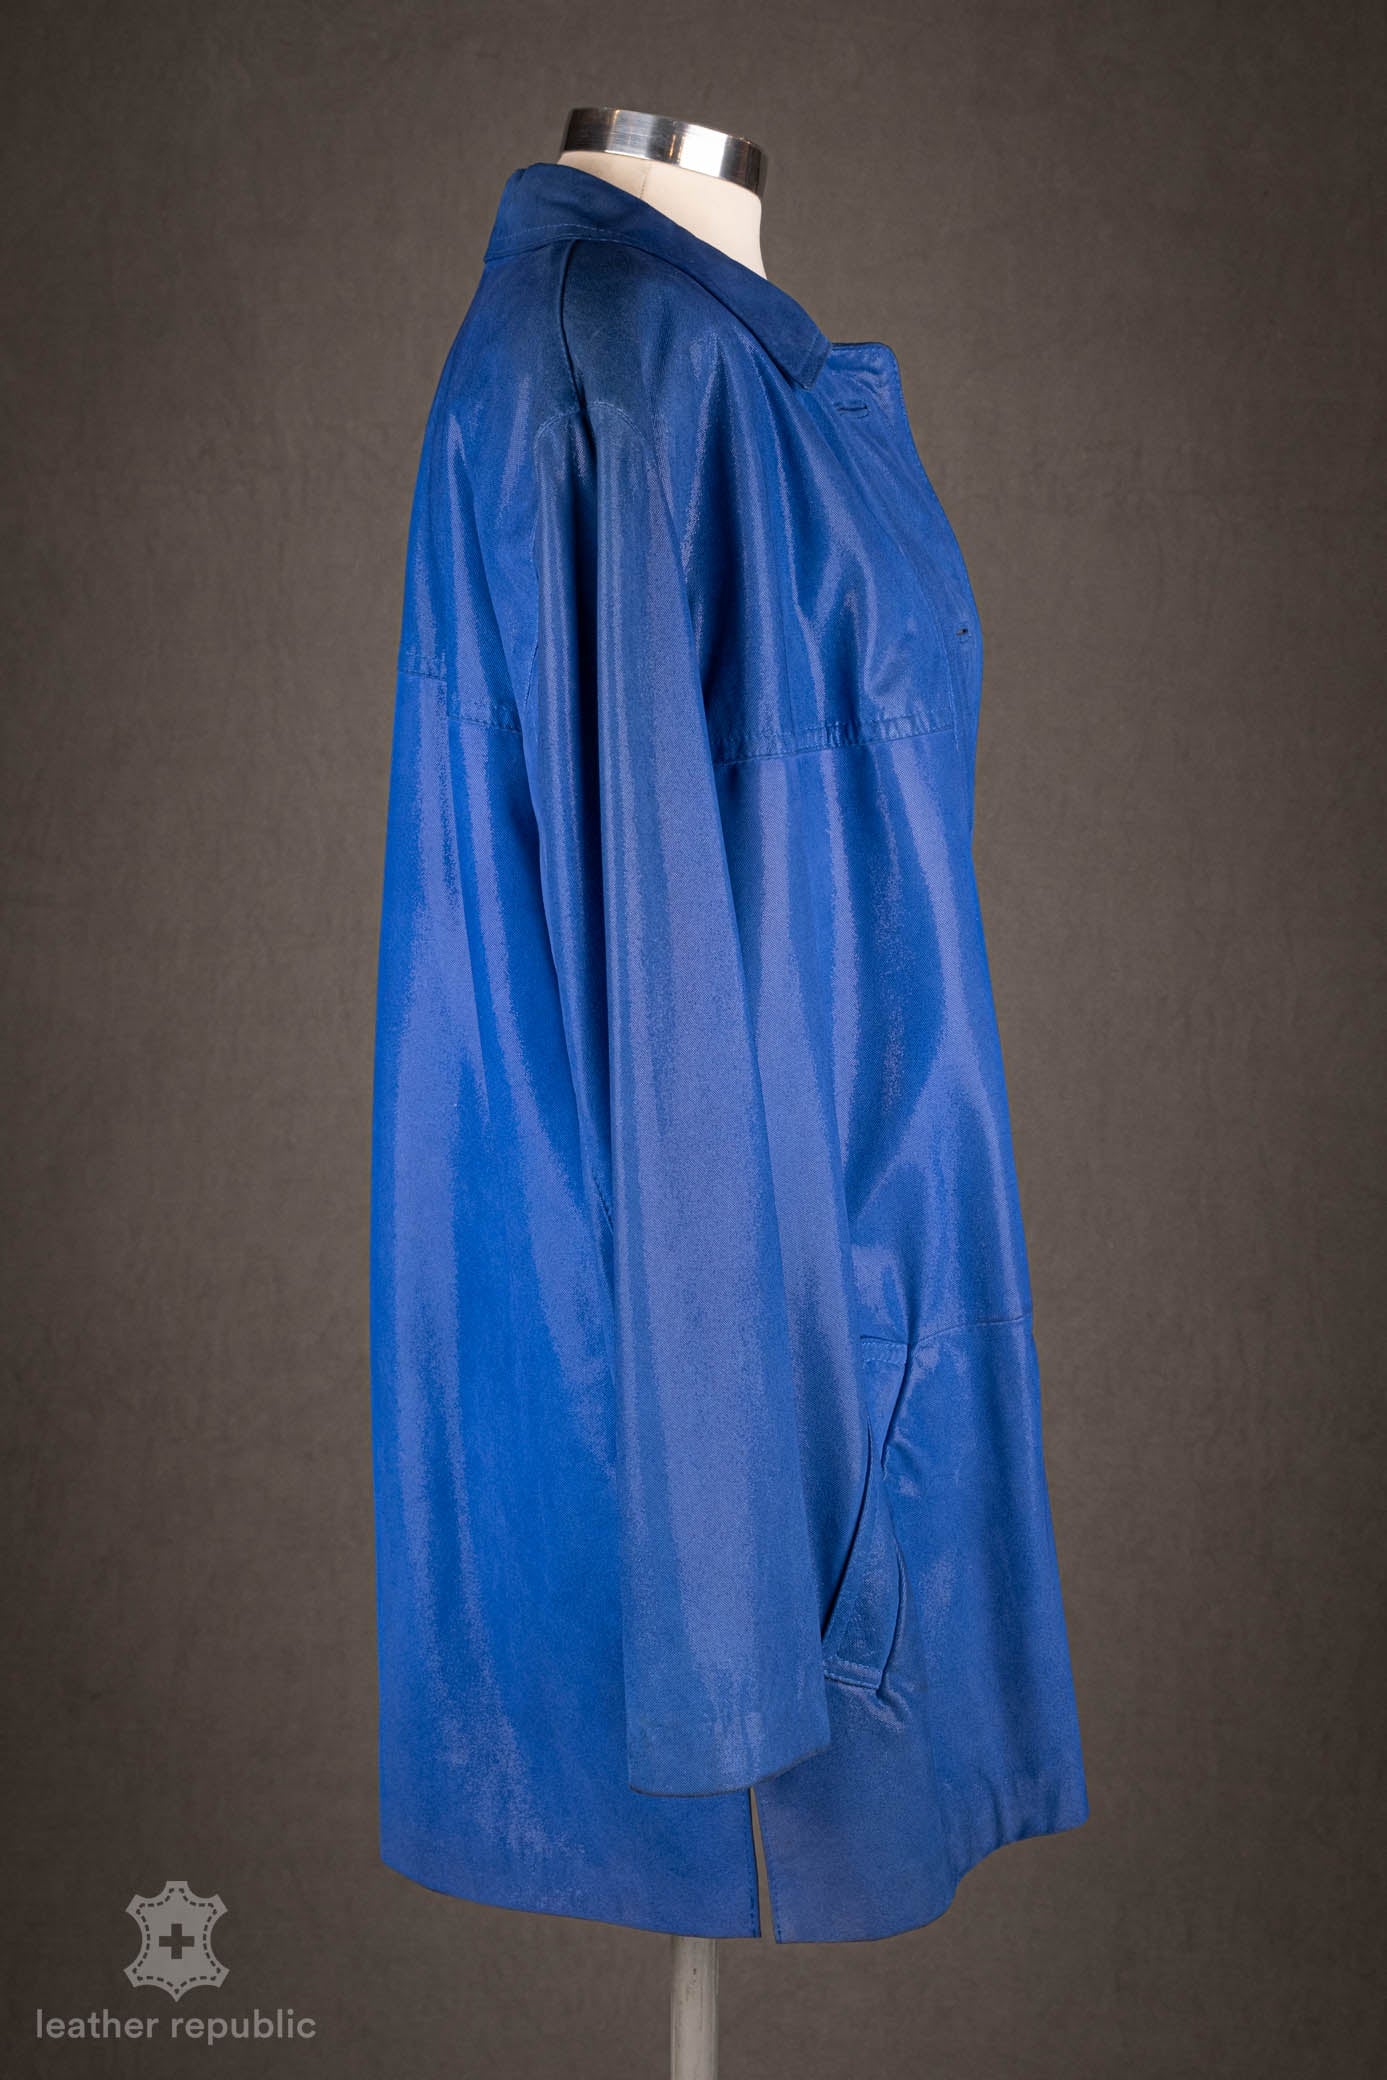 Damen Lederjacke (Lammleder), blau, Grösse 40/L